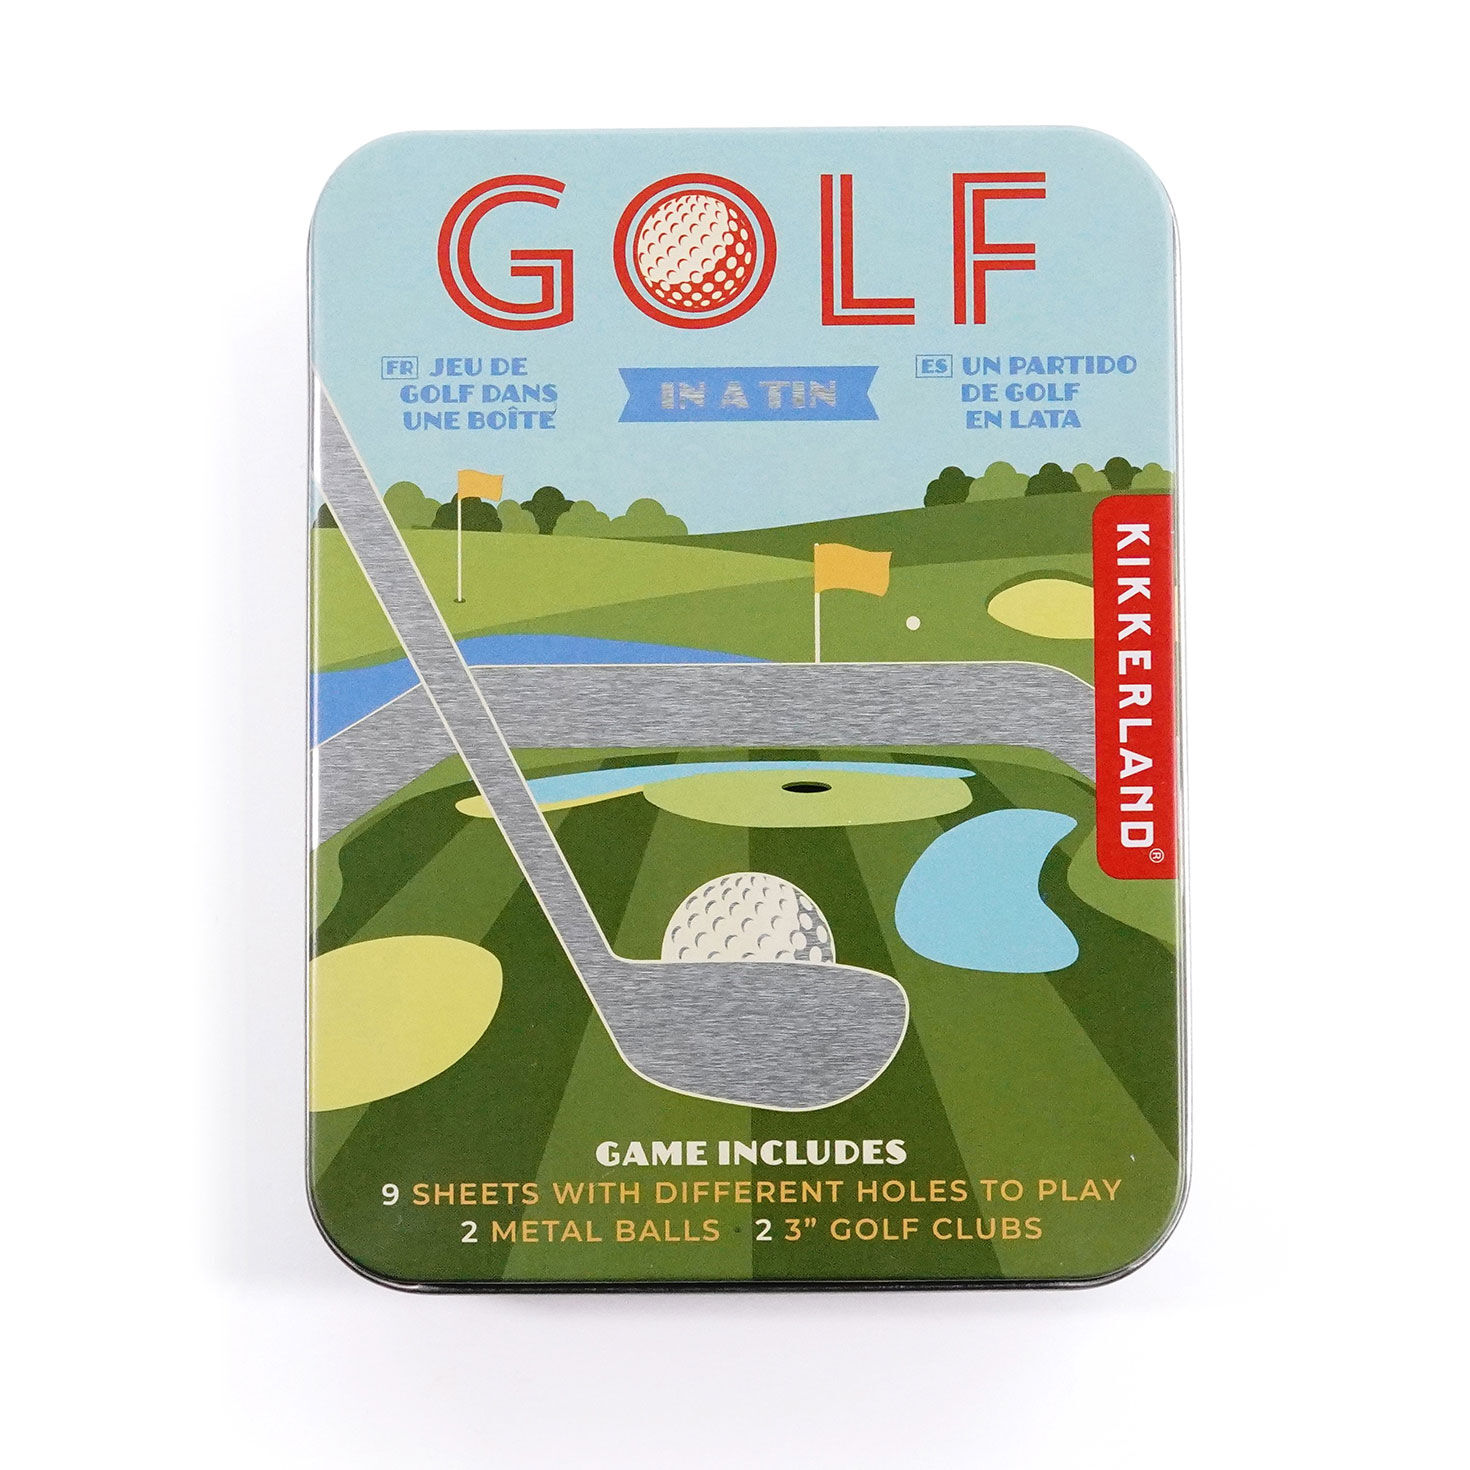 Retro-style mini golf – temporary or permanent use - Adventure Golf & Sports